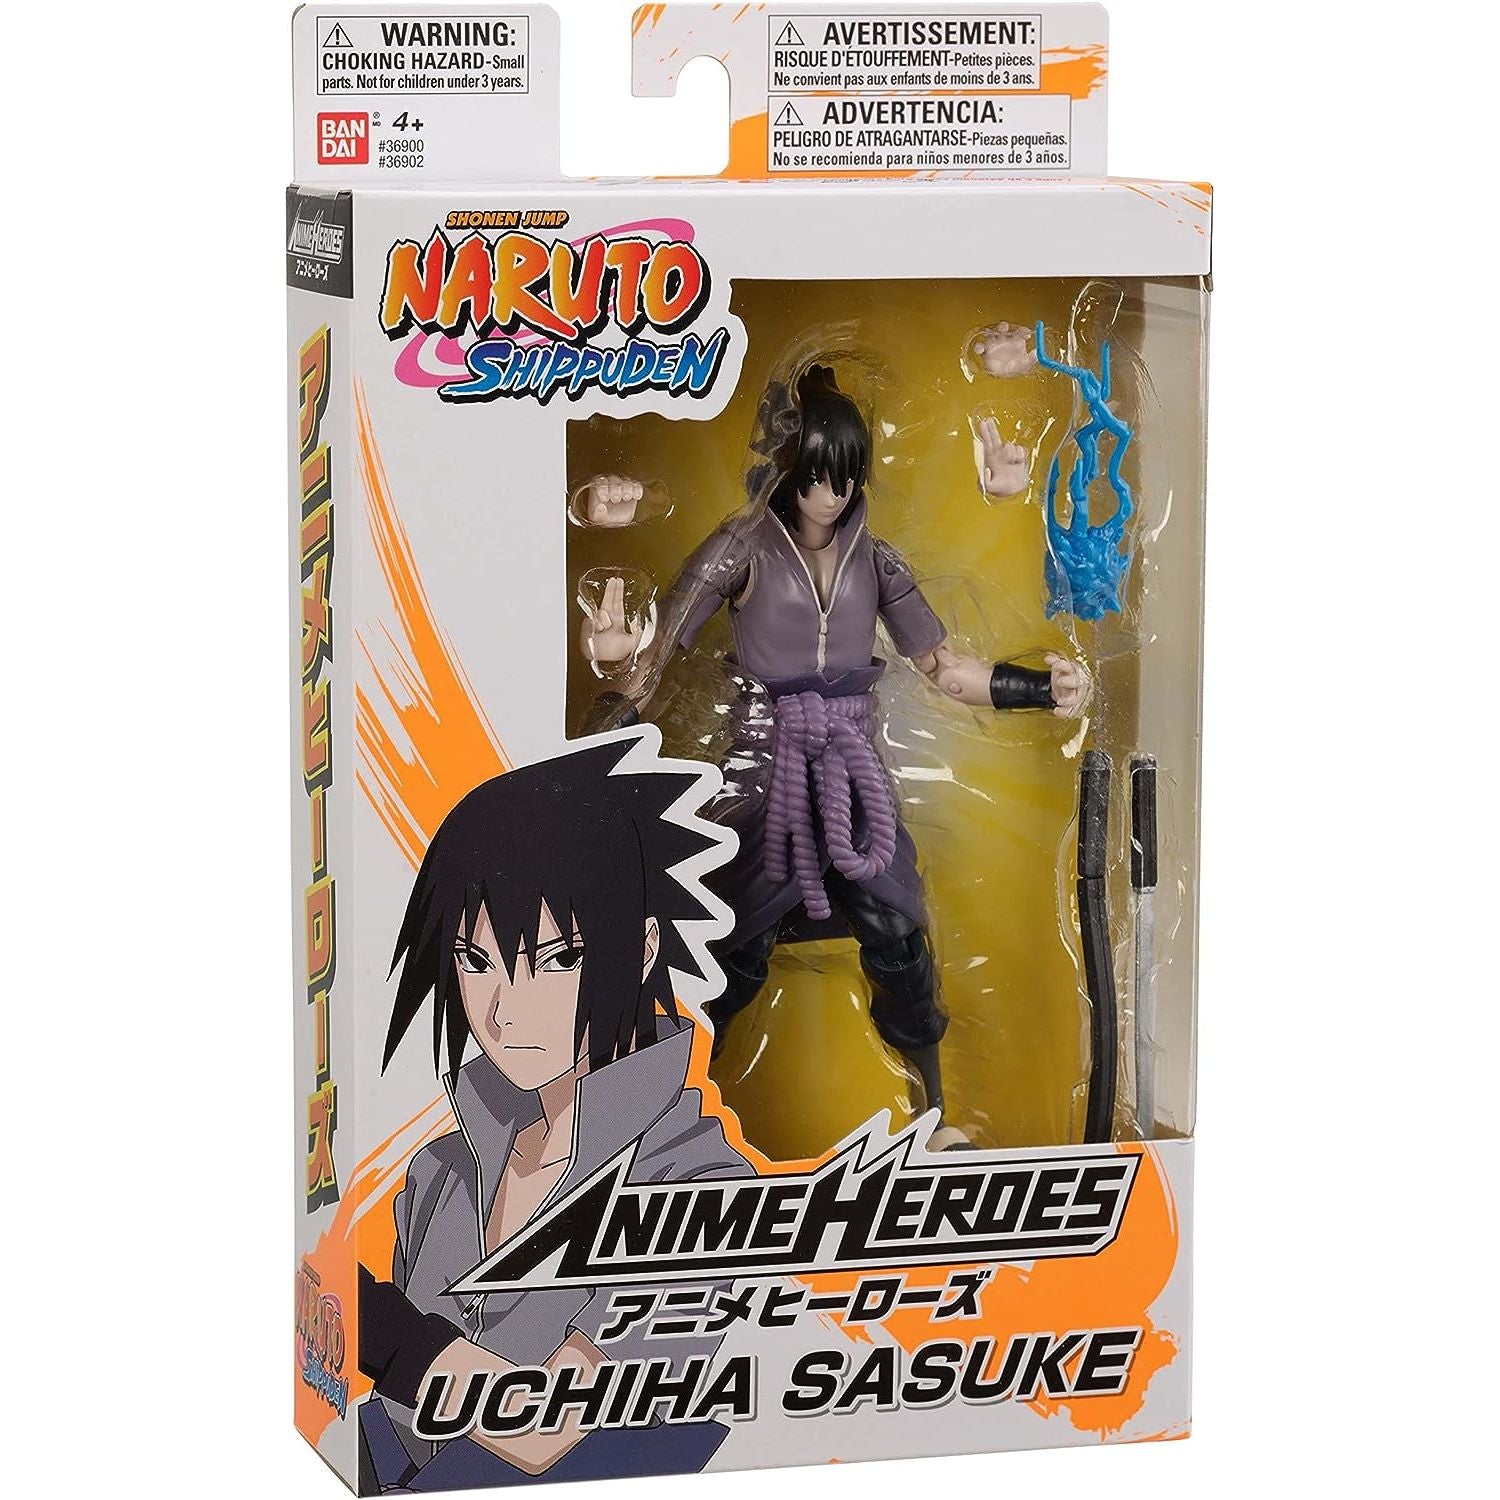 ANIME HEROES Naruto Uchiha Sasuke Action Figure